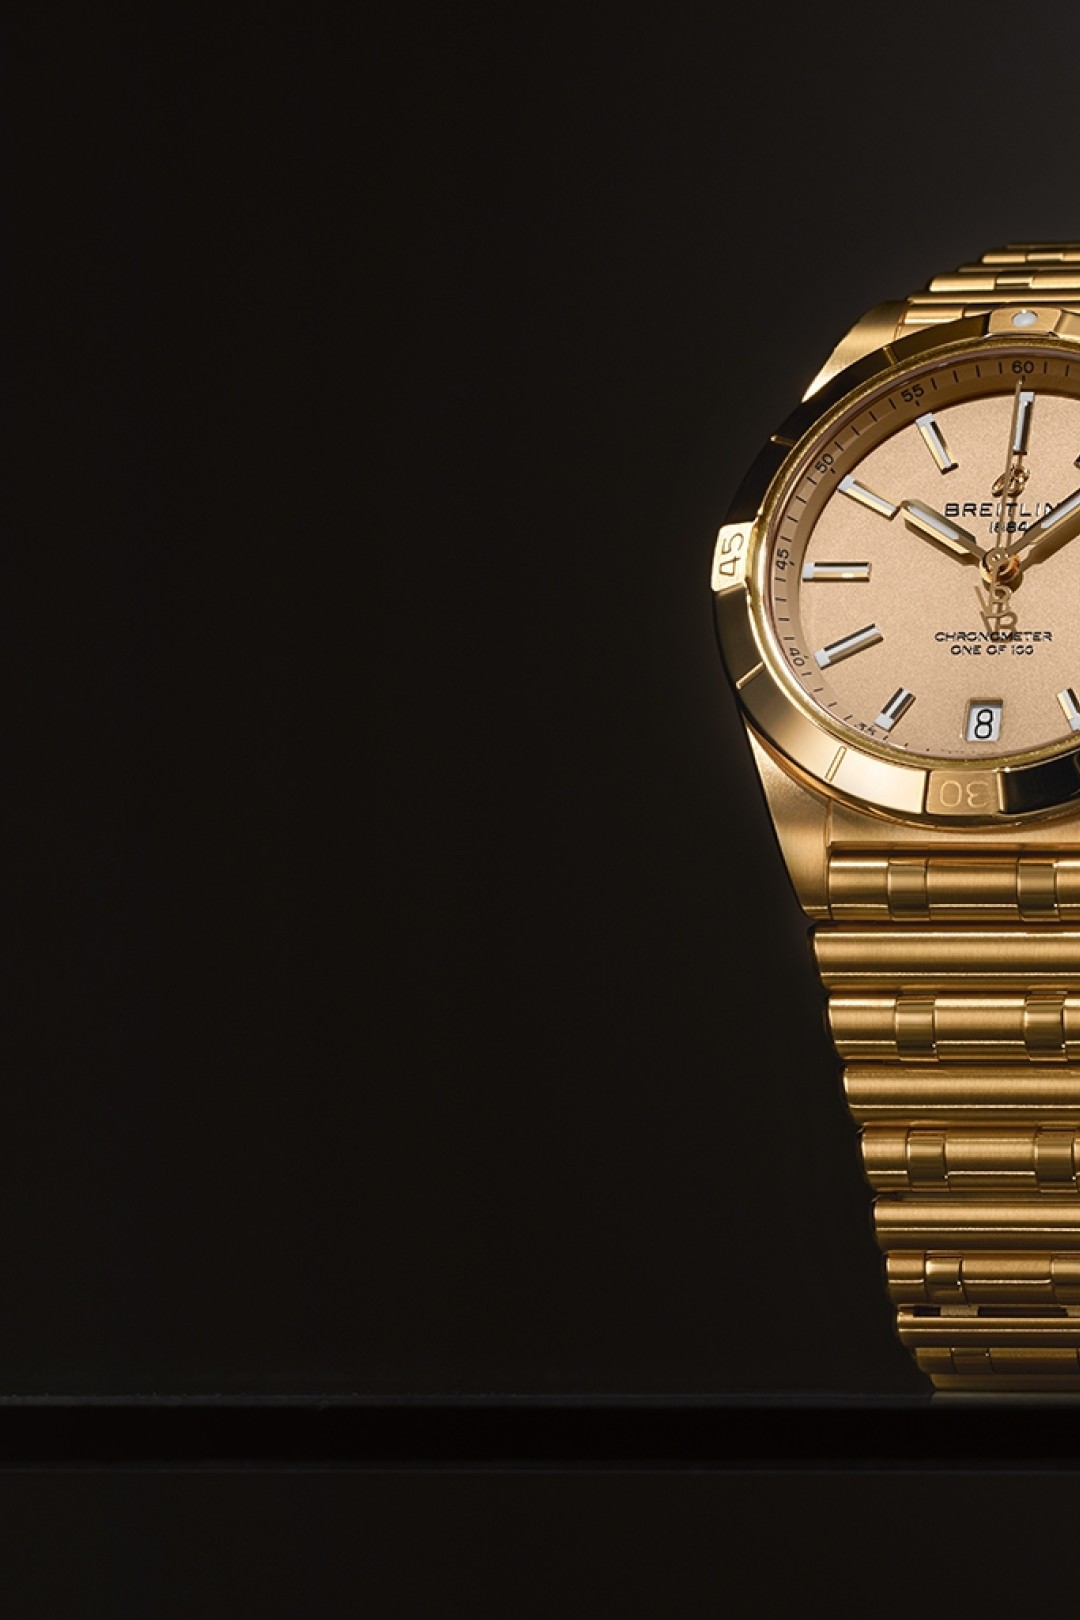 L'OFFICIEL ANNOUNCES THE LAUNCH and ROLLOUT OF “LA REVUE DES MONTRES”  across ASIA, a leading luxury watch and jewellery media title under  L'Officiel SAS Inc | Business Wire